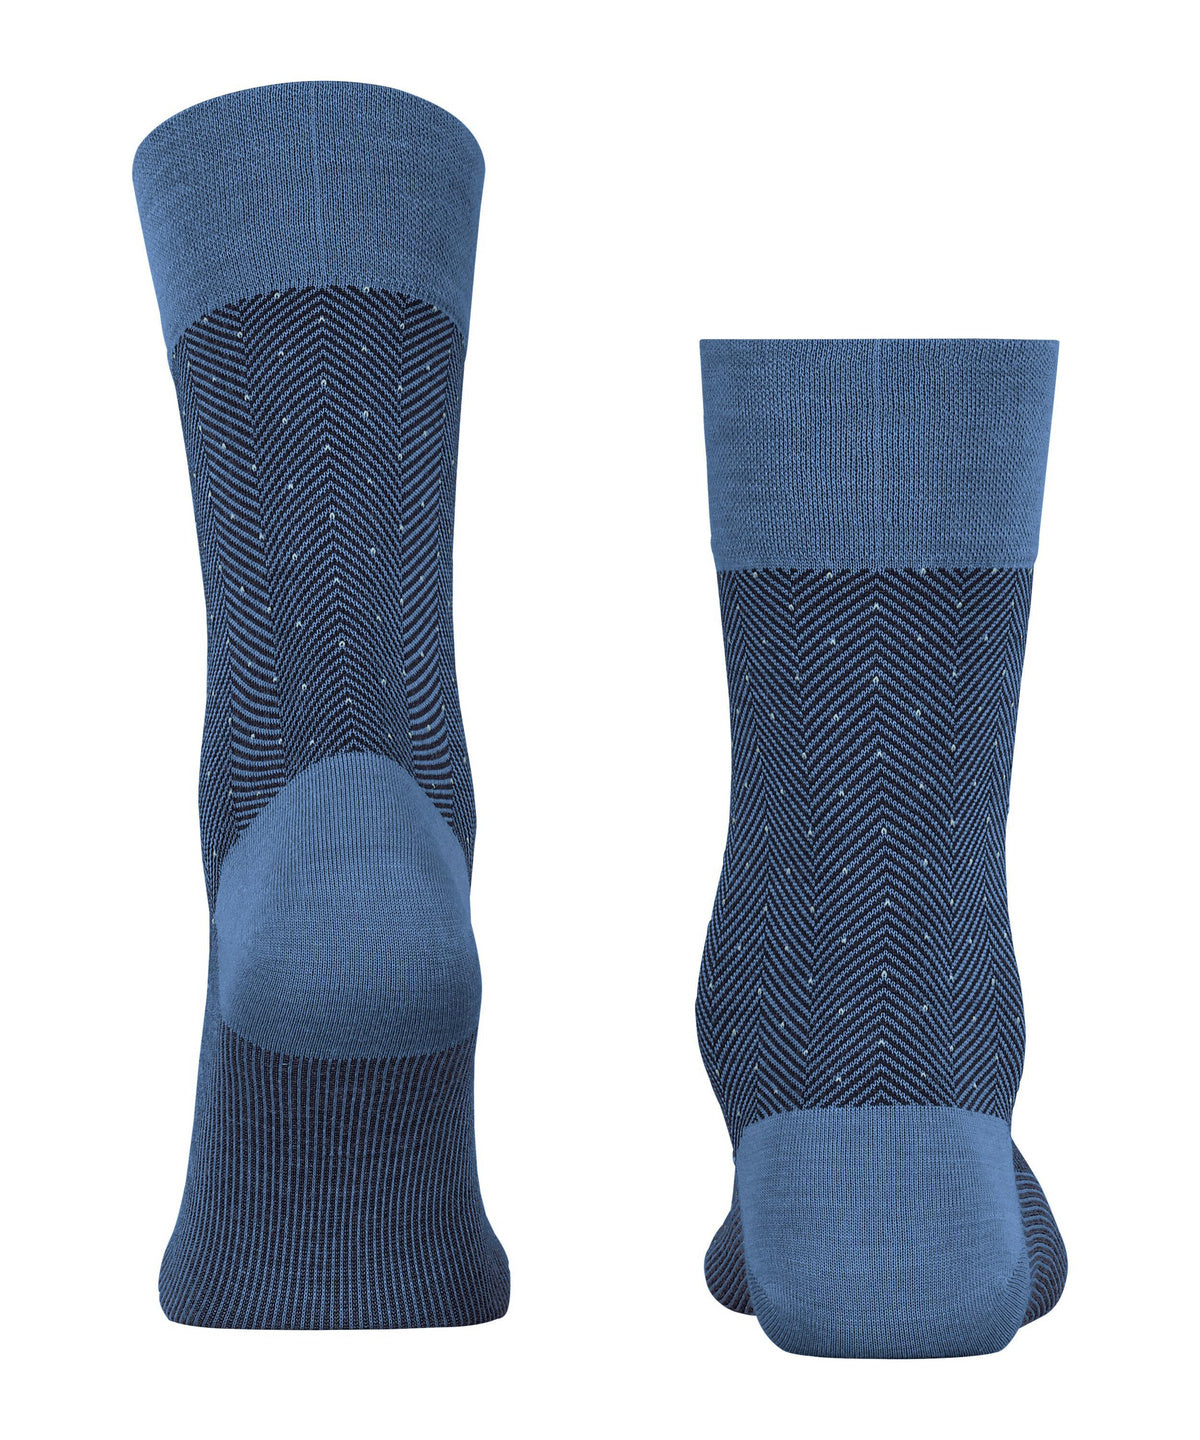 Men's Merino Wool Sock- Blue Falke- Contrary Q. Contrary